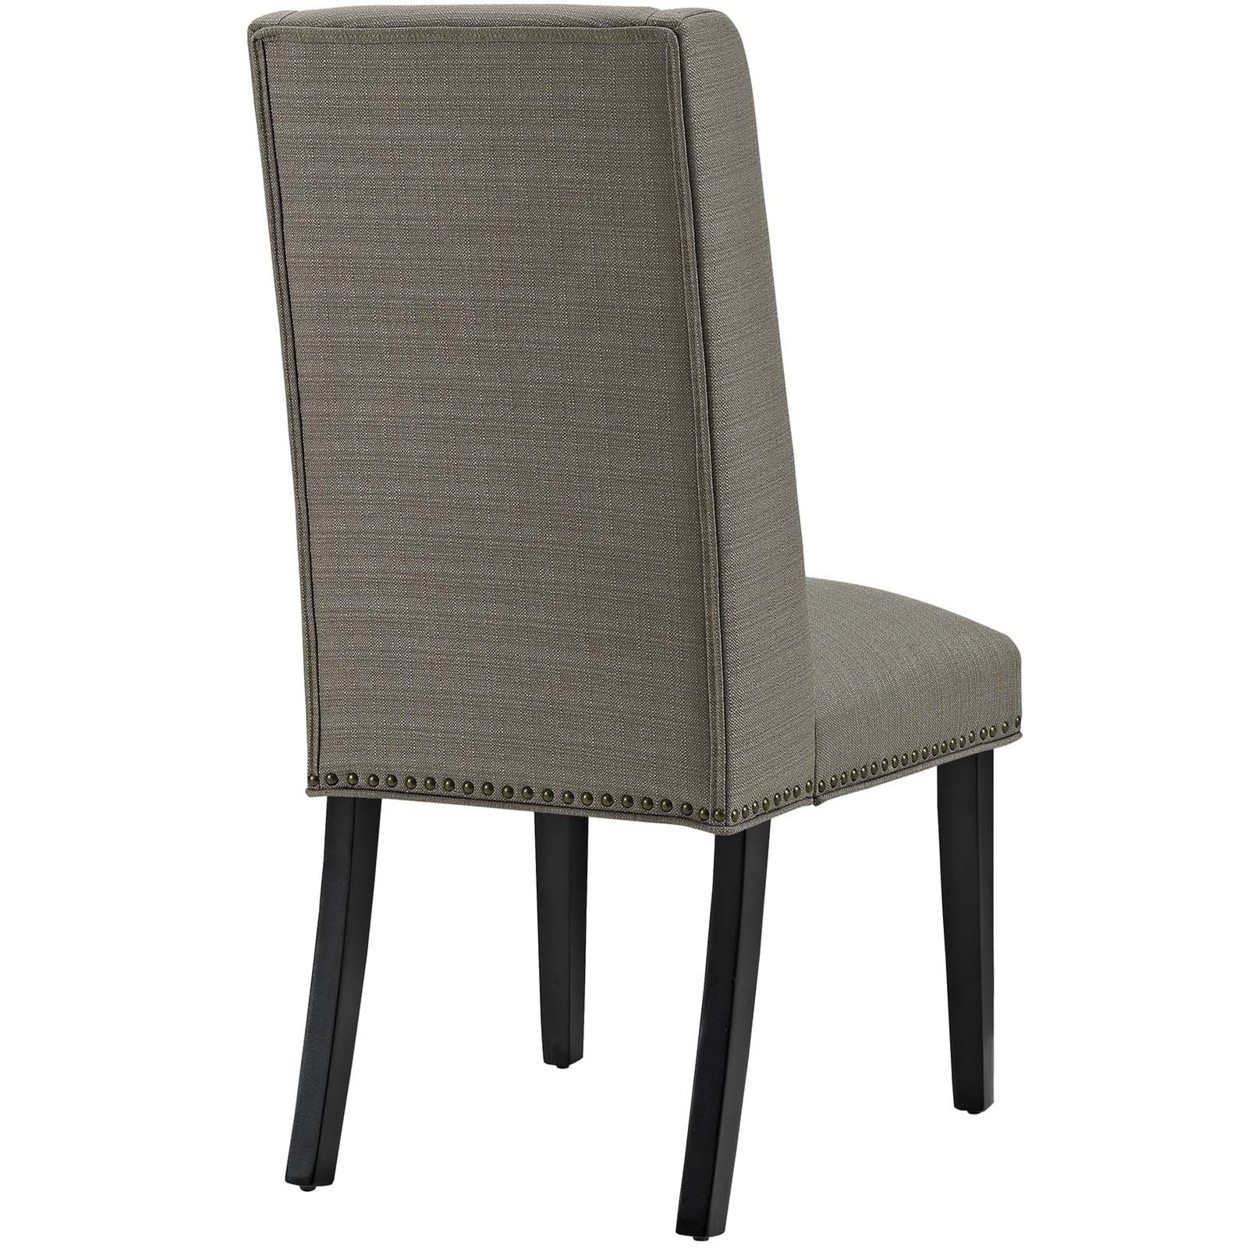 Baron Fabric Dining Chair, Granite